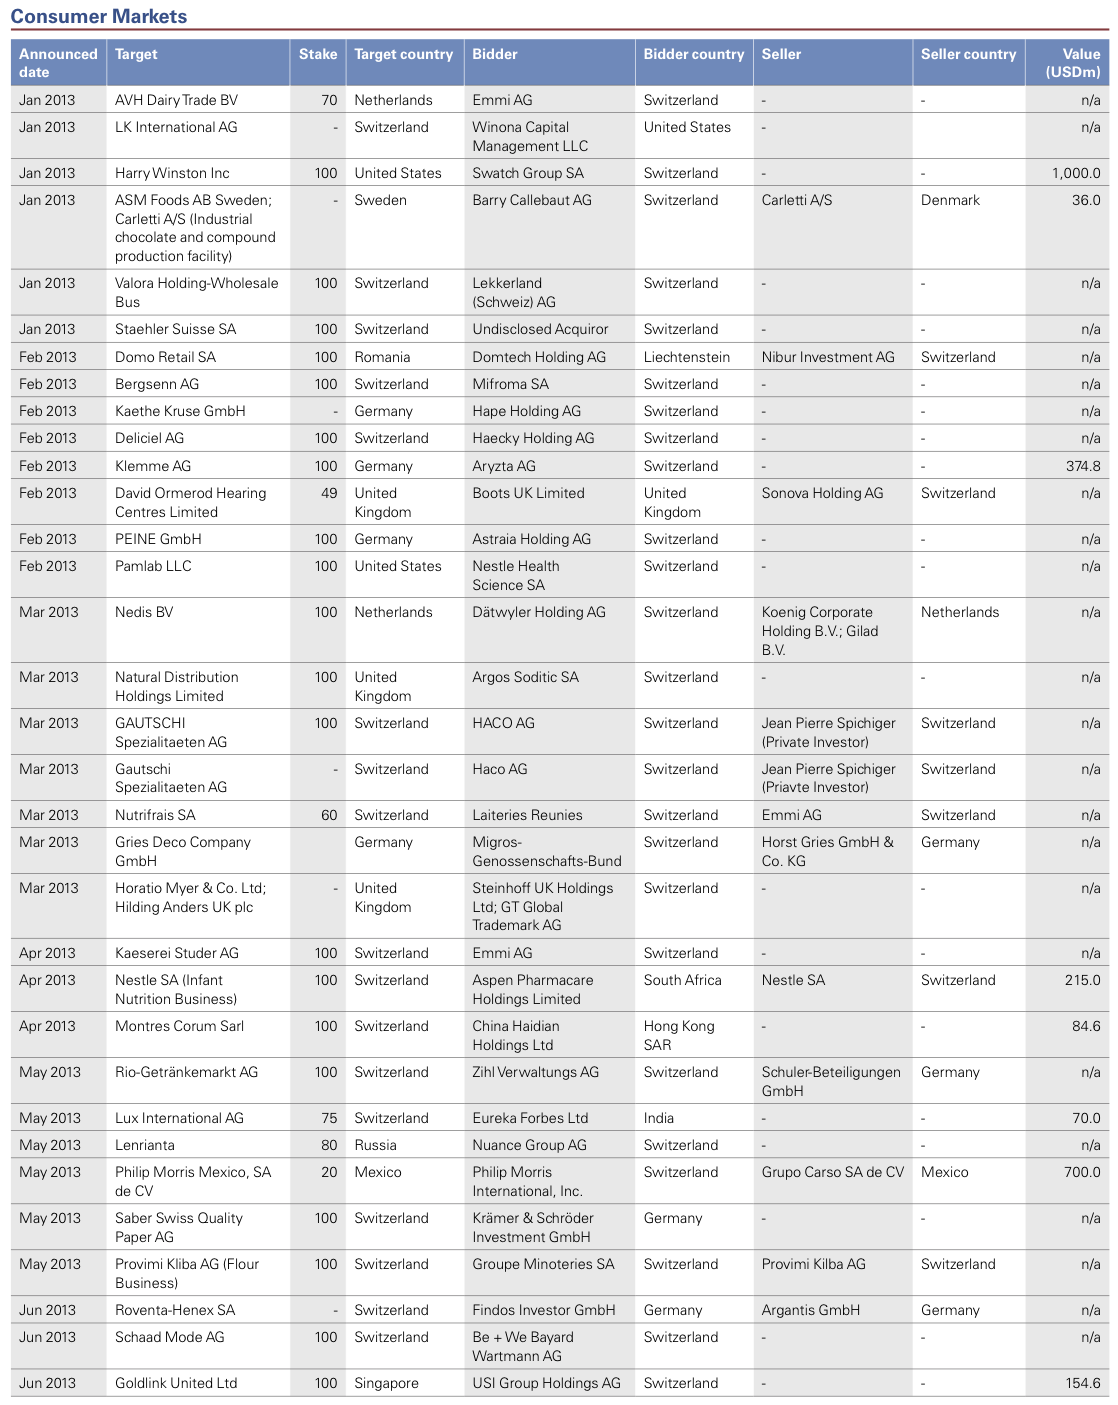 Figure 20: List of 2013 Swiss M&A Transactions